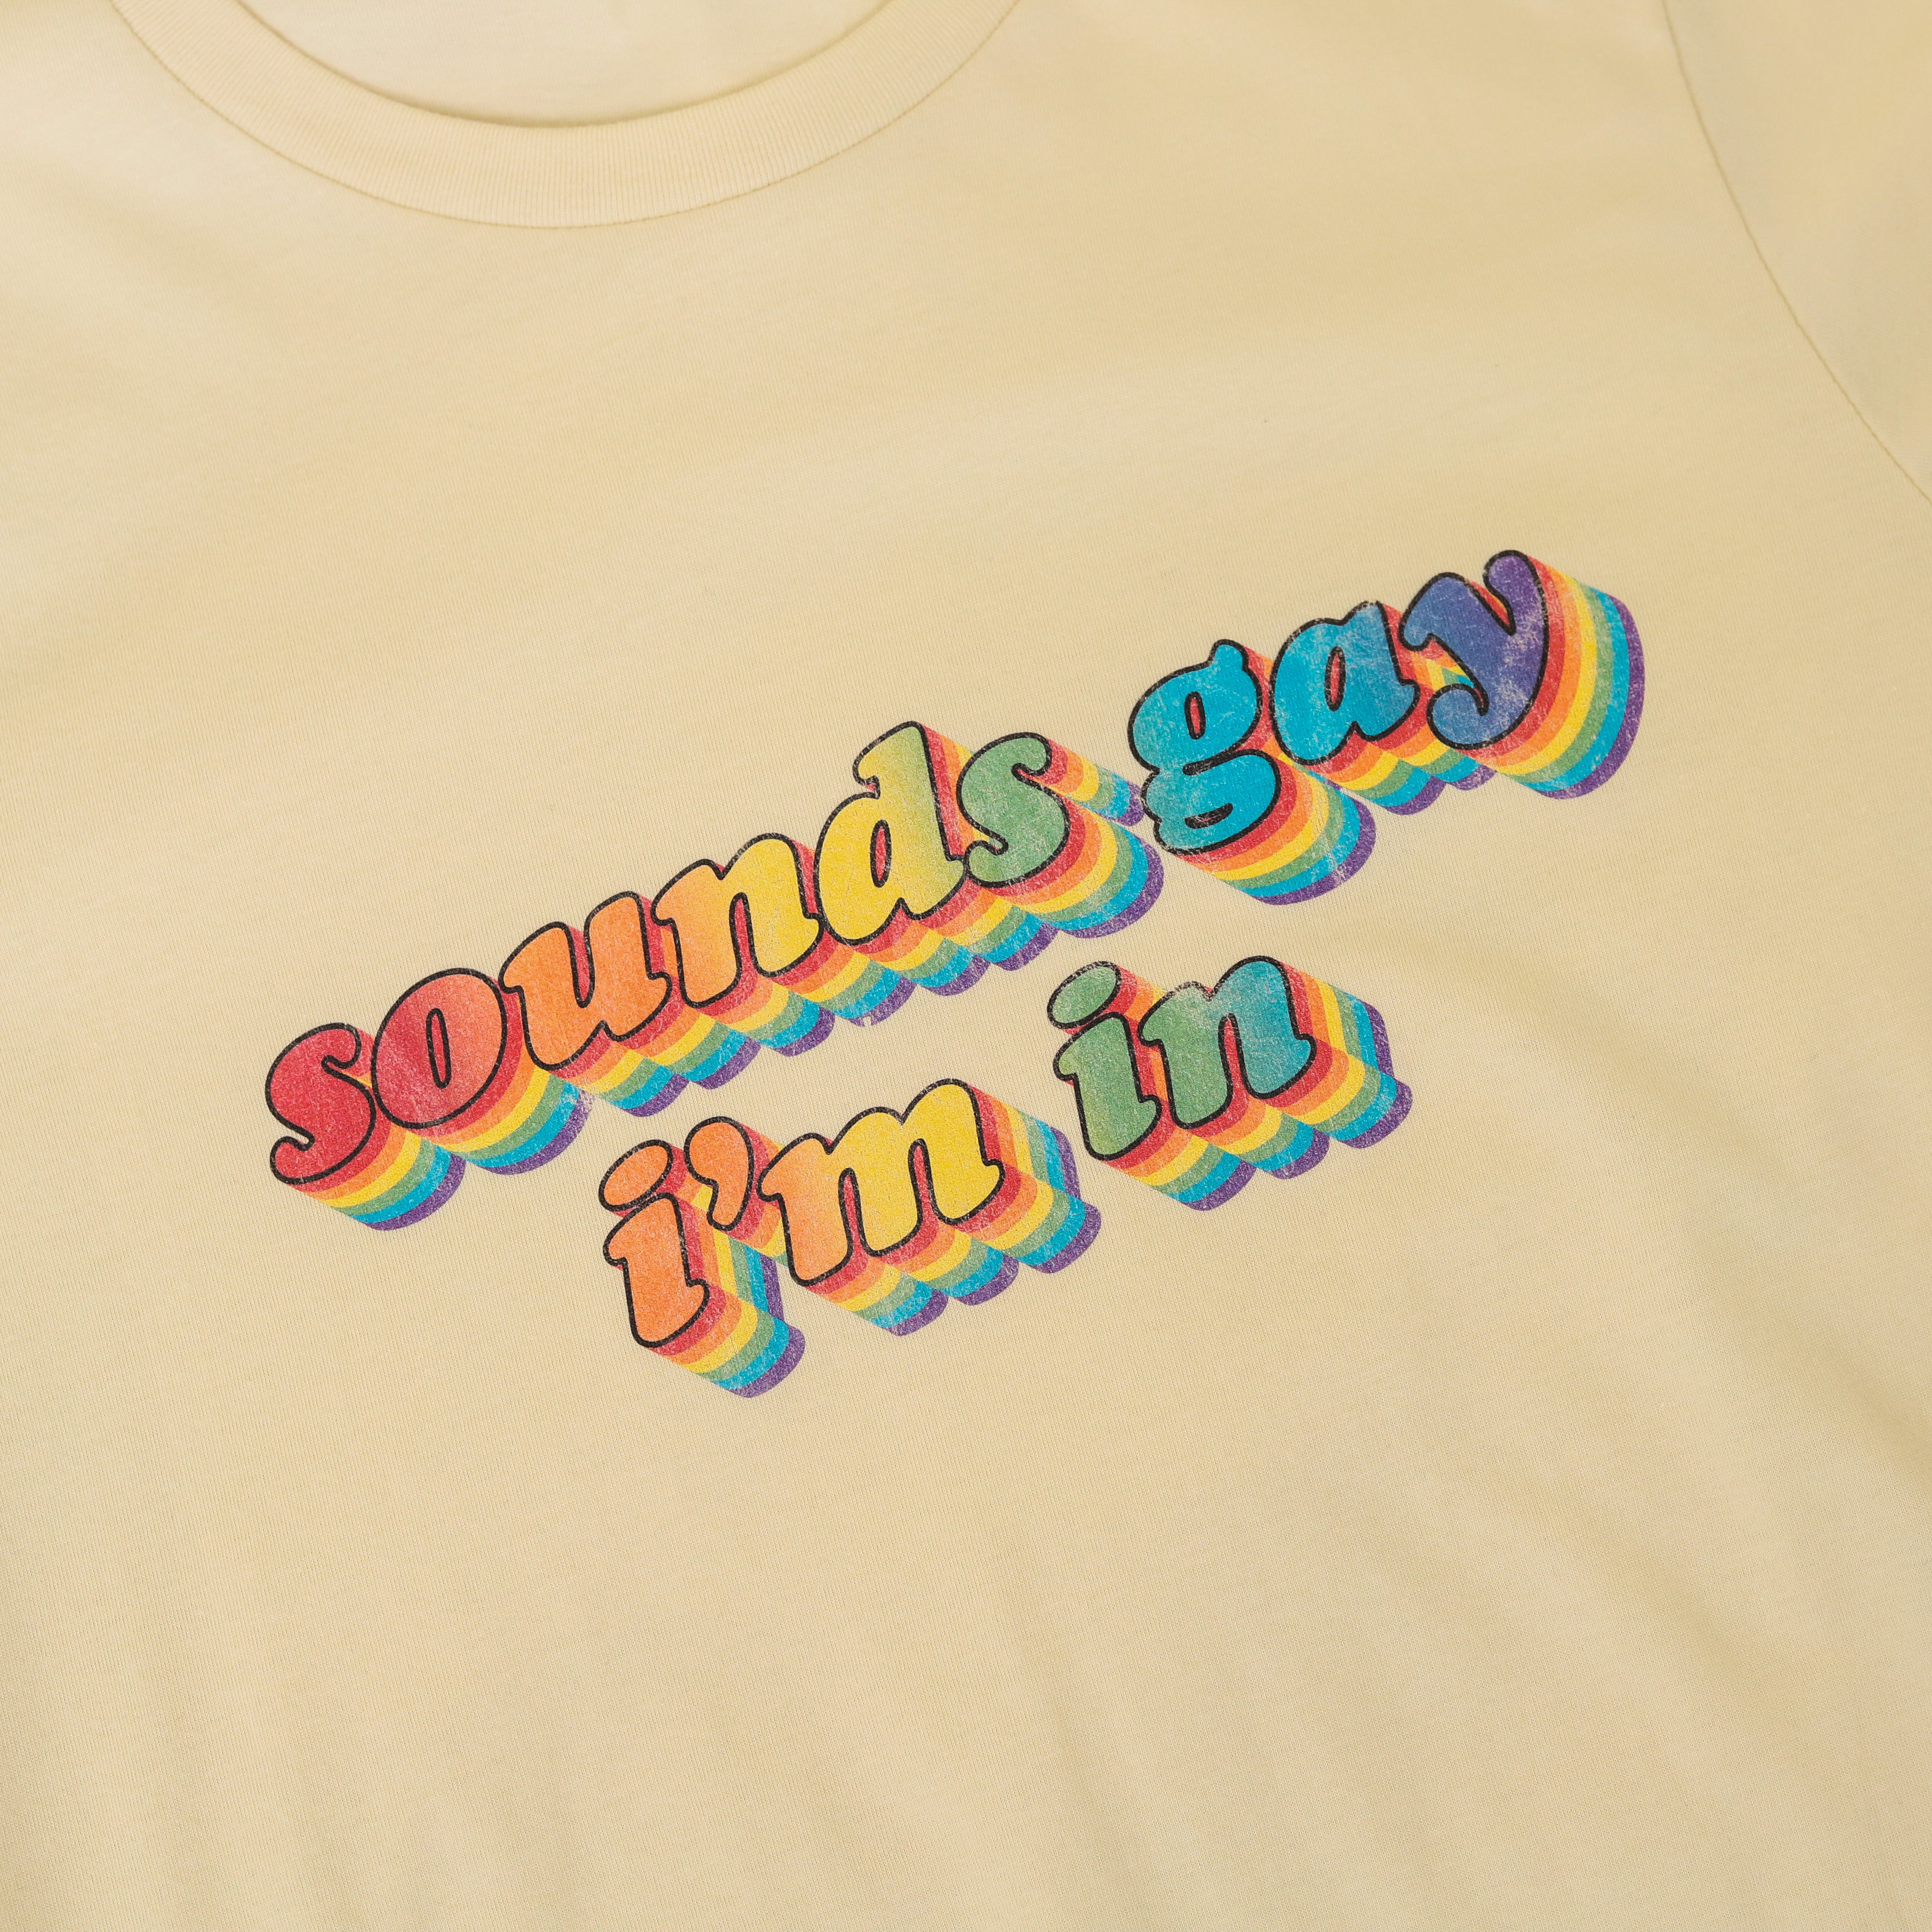 Sounds Gay I'm In T-Shirt – The Junkyard